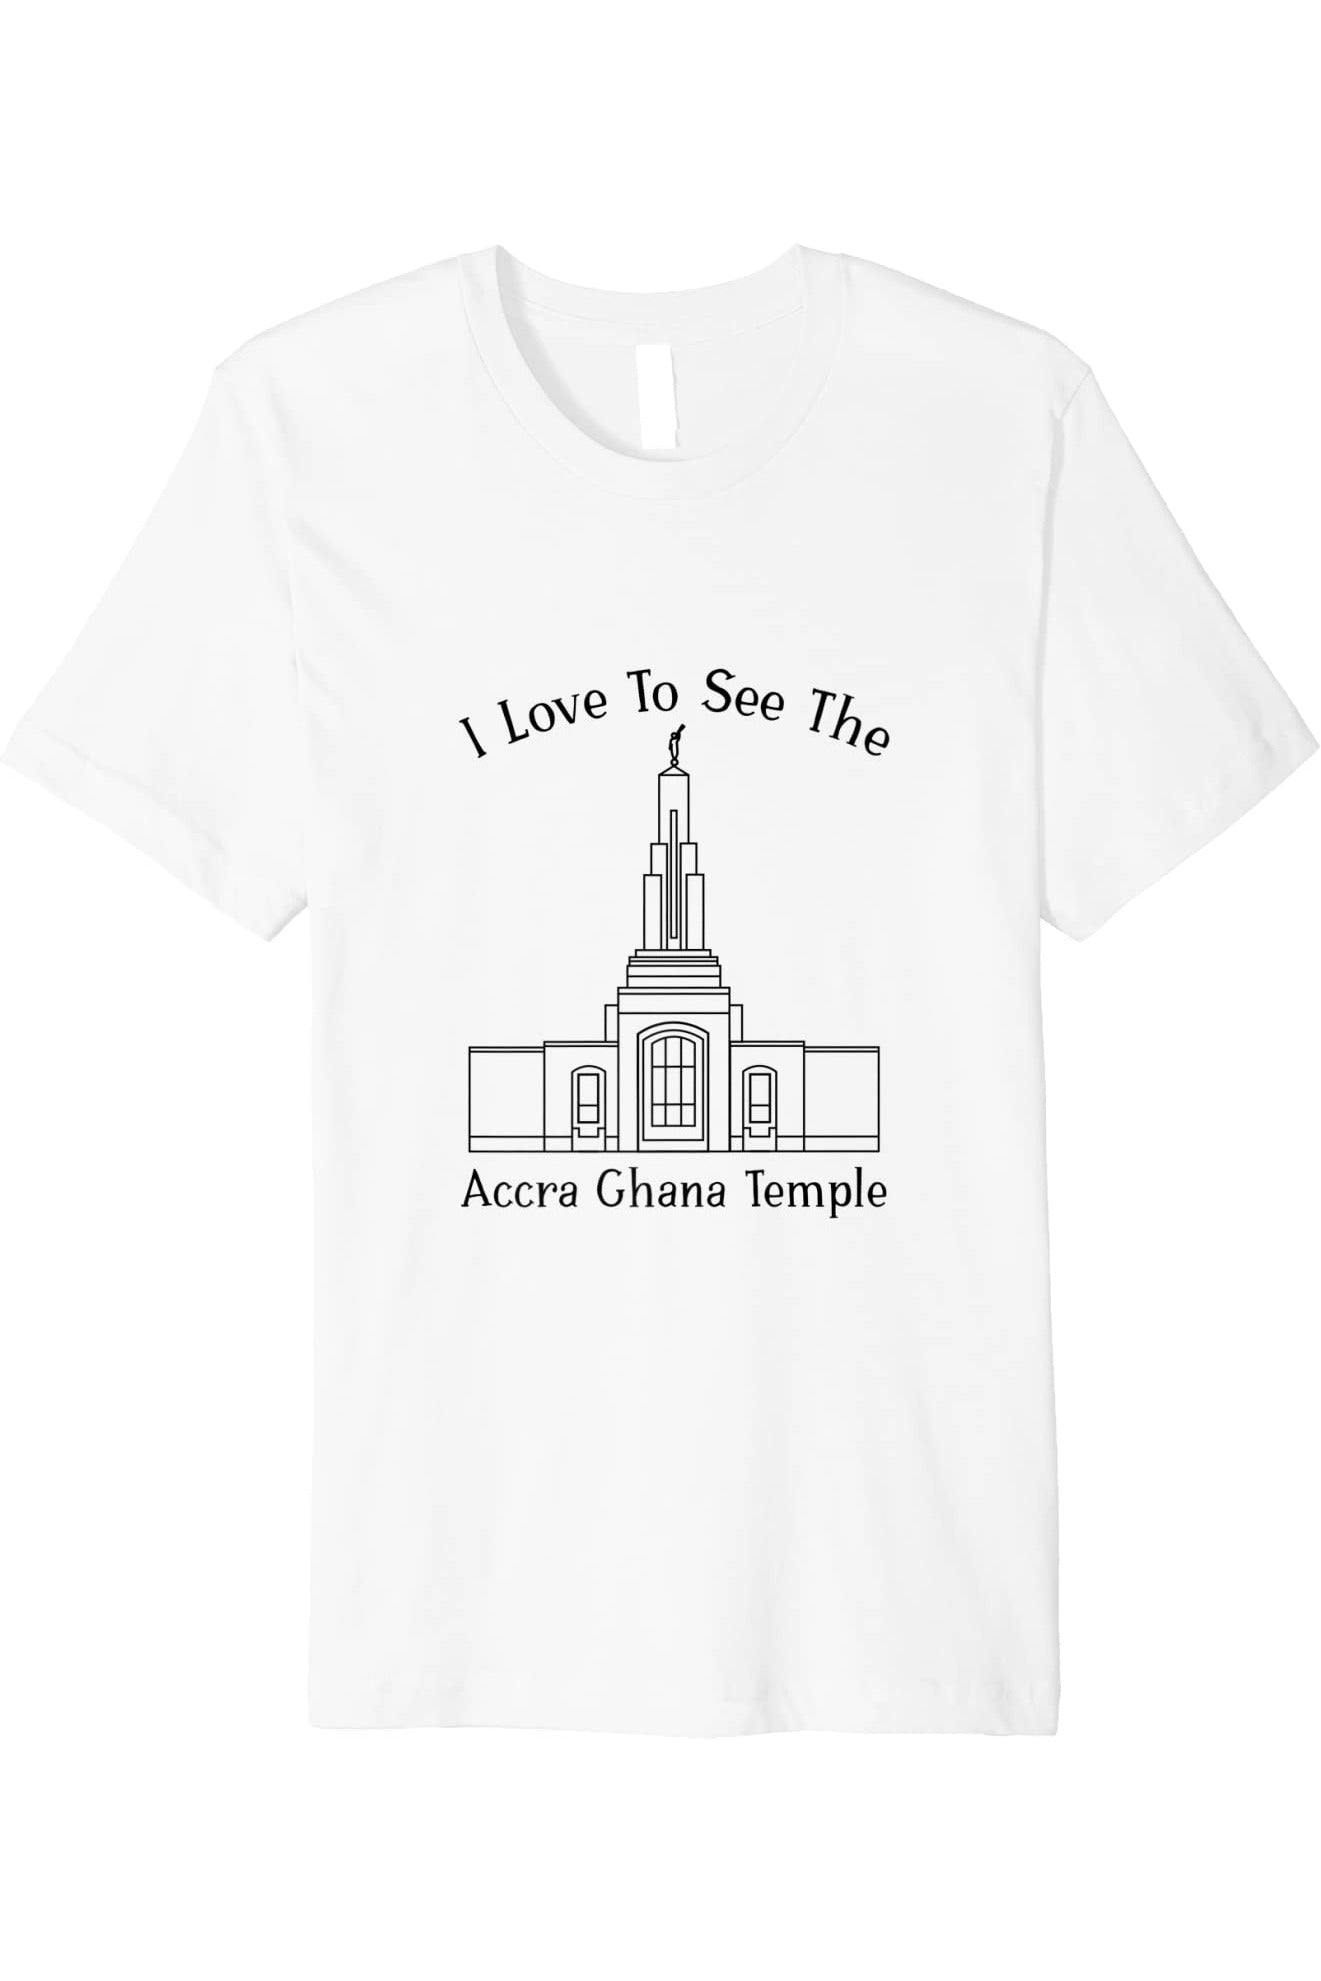 Accra Ghana Temple T-Shirt - Premium - Happy Style (English) US